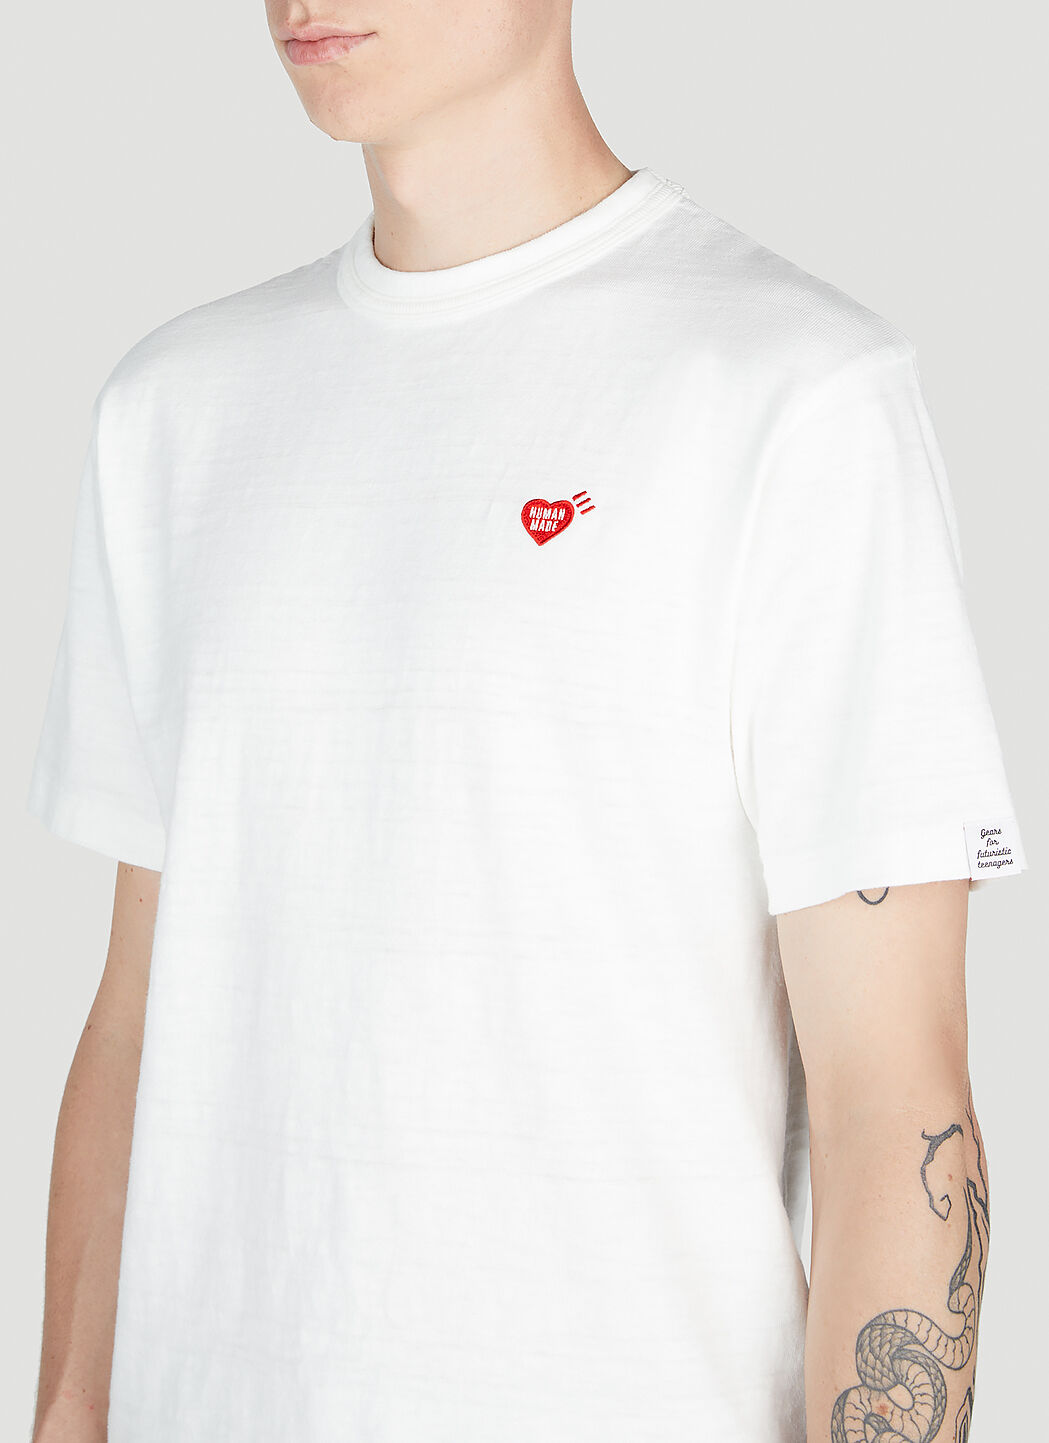 Human Made Heart Badge T-Shirt in White | LN-CC®